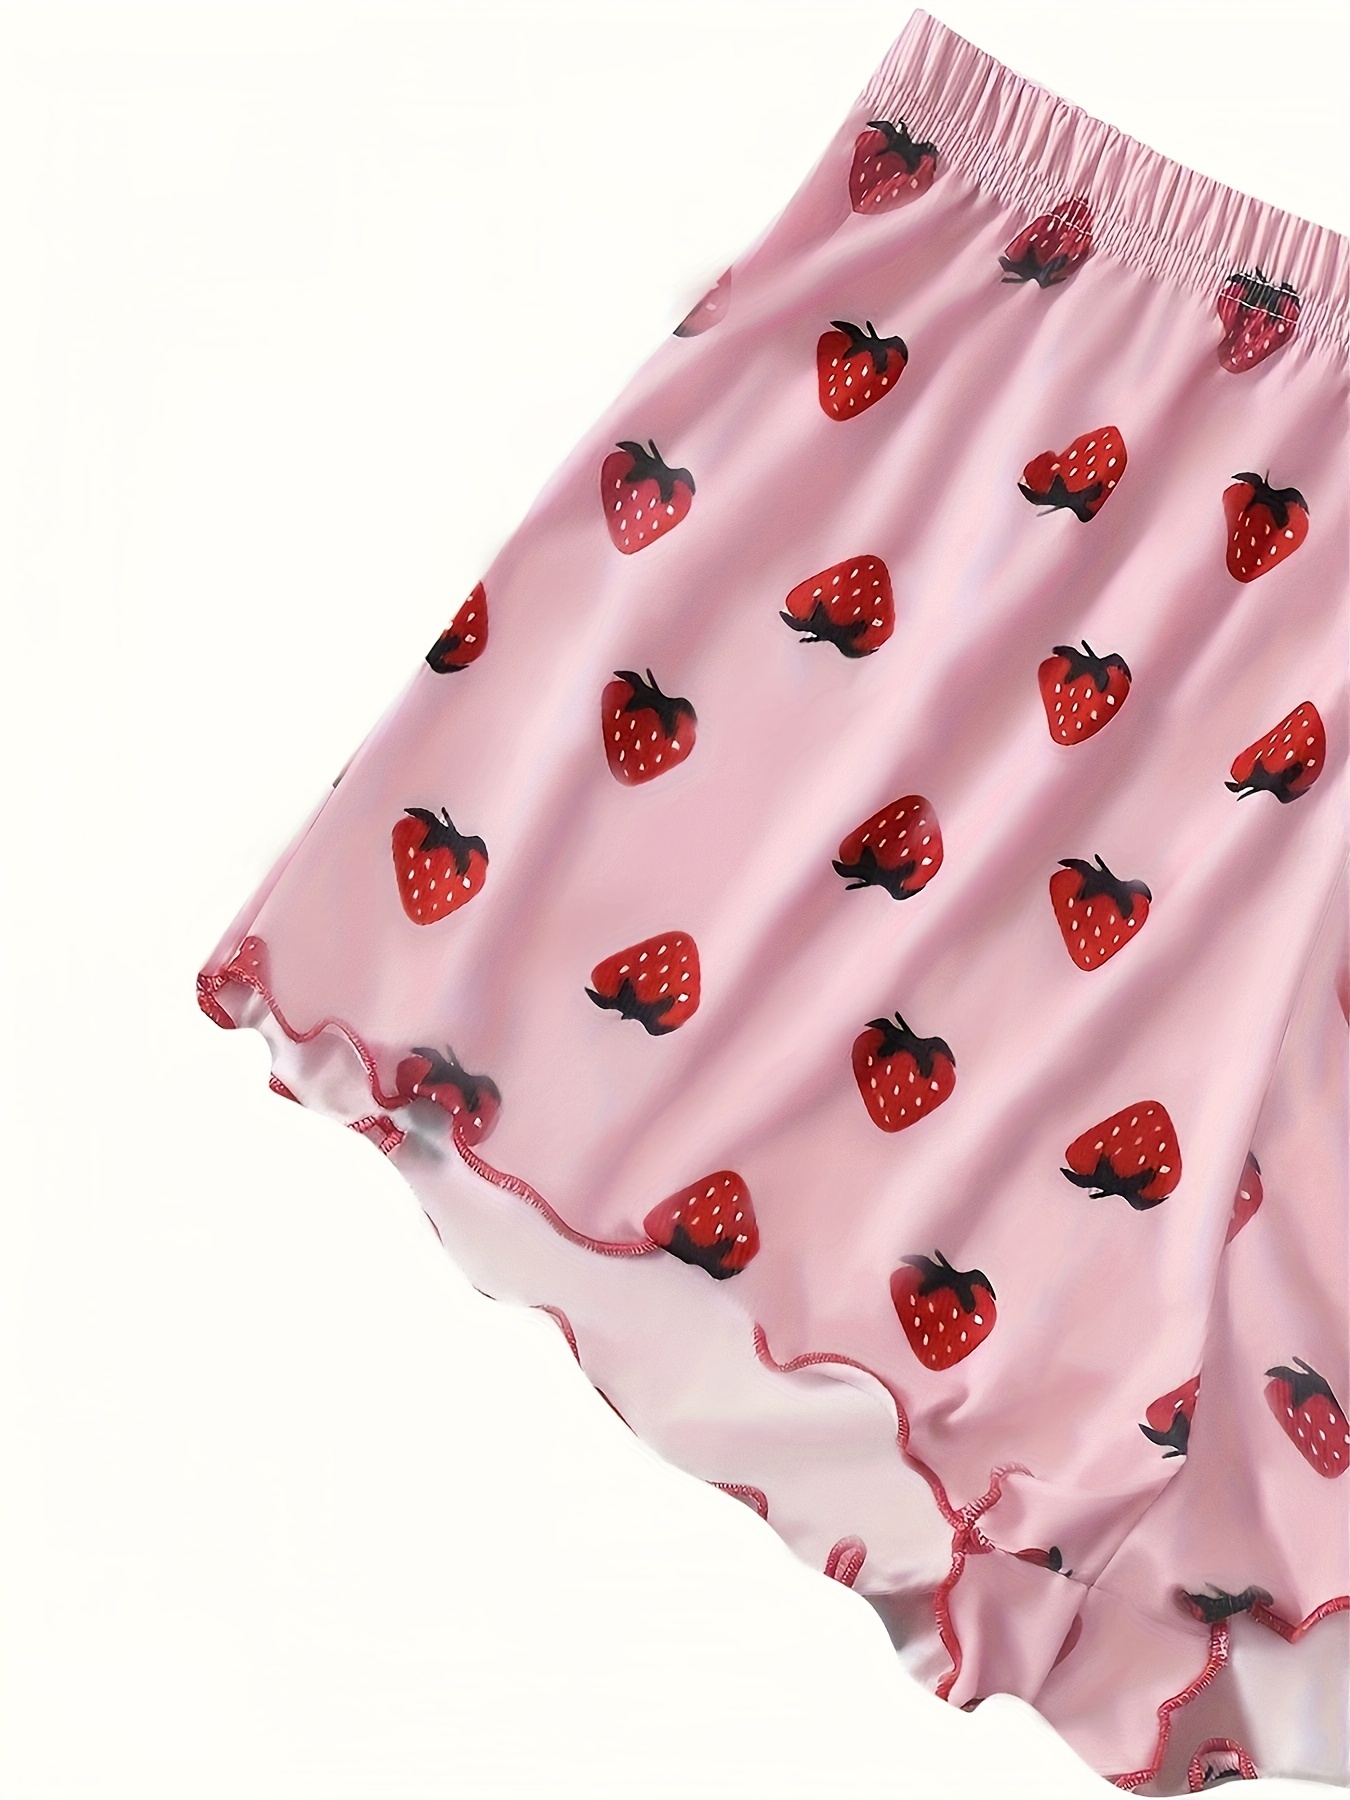 Jilneed Cute Pajama Shorts for Women Strawberry Print Cotton